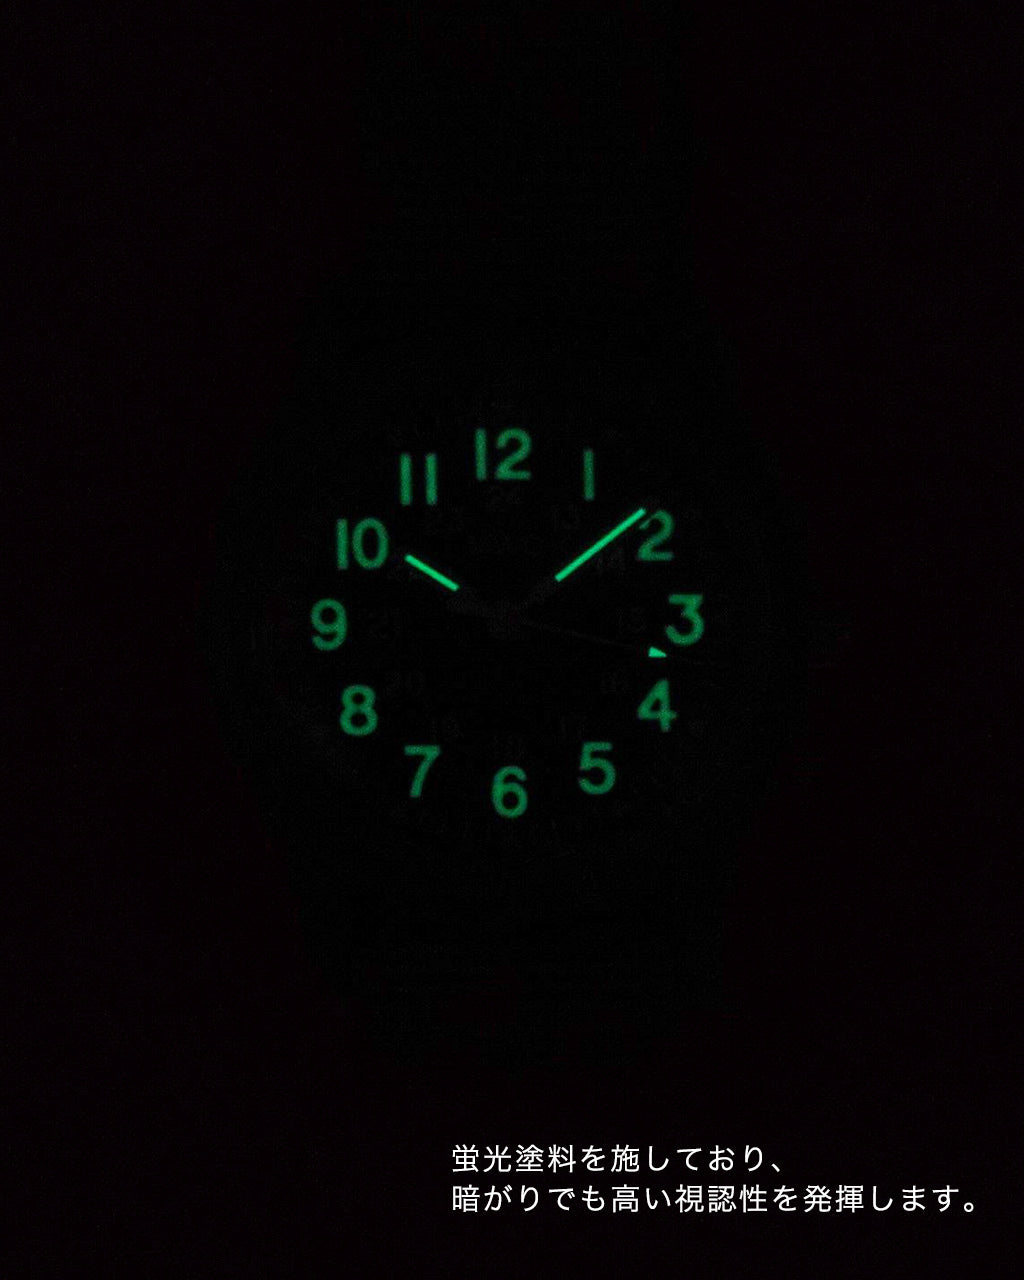 MWC ミリタリーウォッチカンパニー インファントリー ウォッチ Infantry Watch ナイロンストラップ ミッションウォッチ 腕時計 【送料無料】